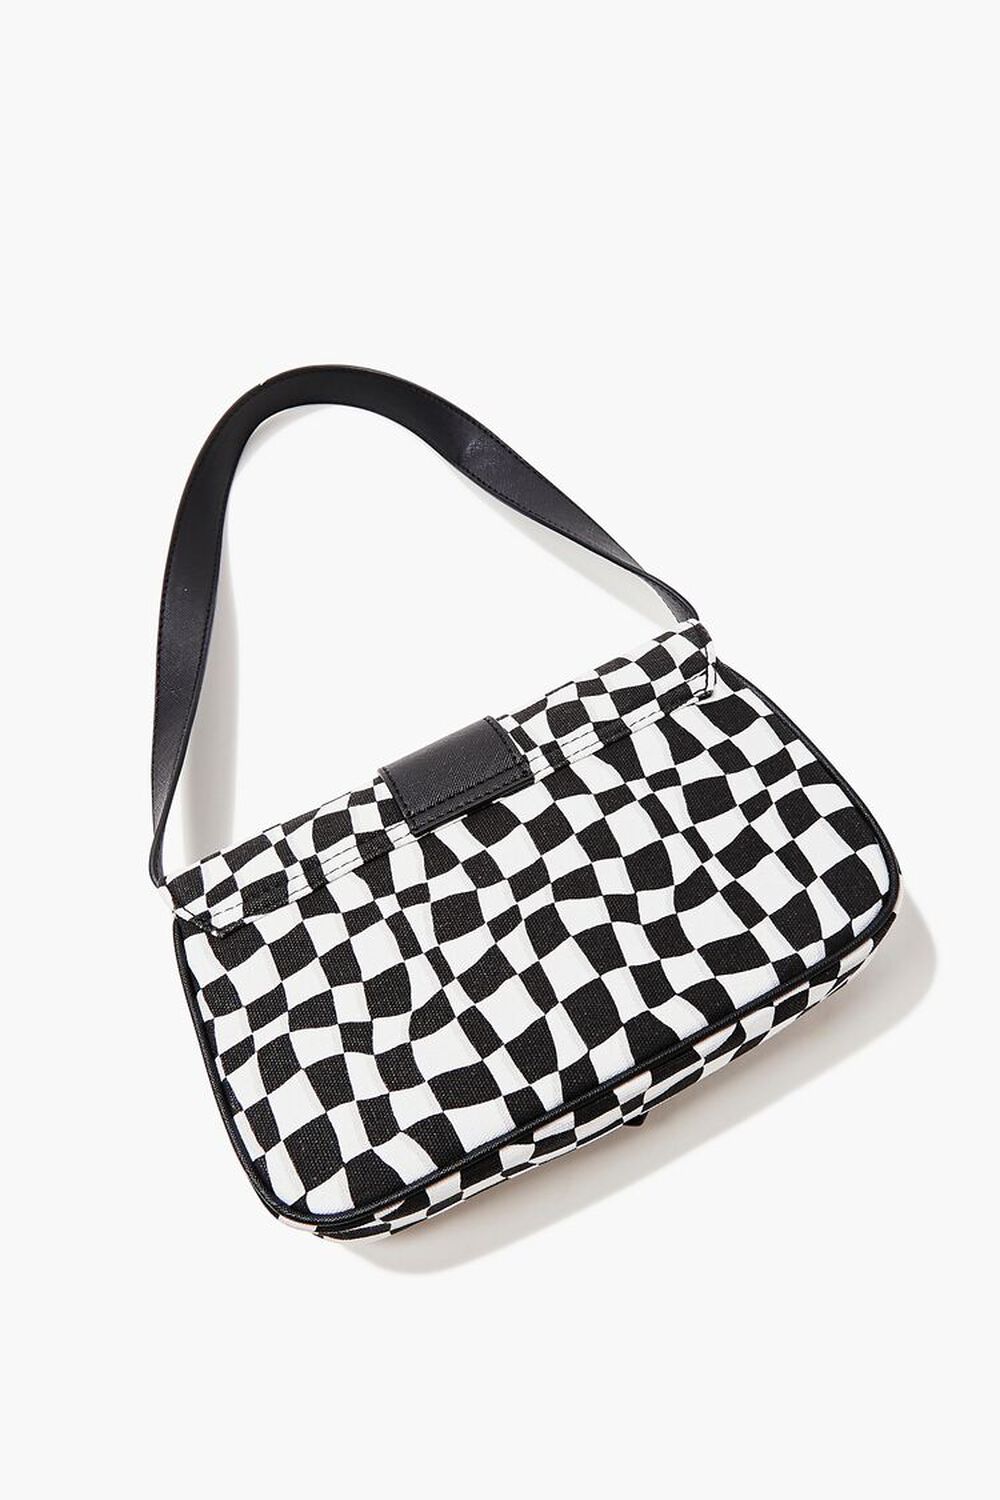 Wavy Checkered Shoulder Bag, image 2